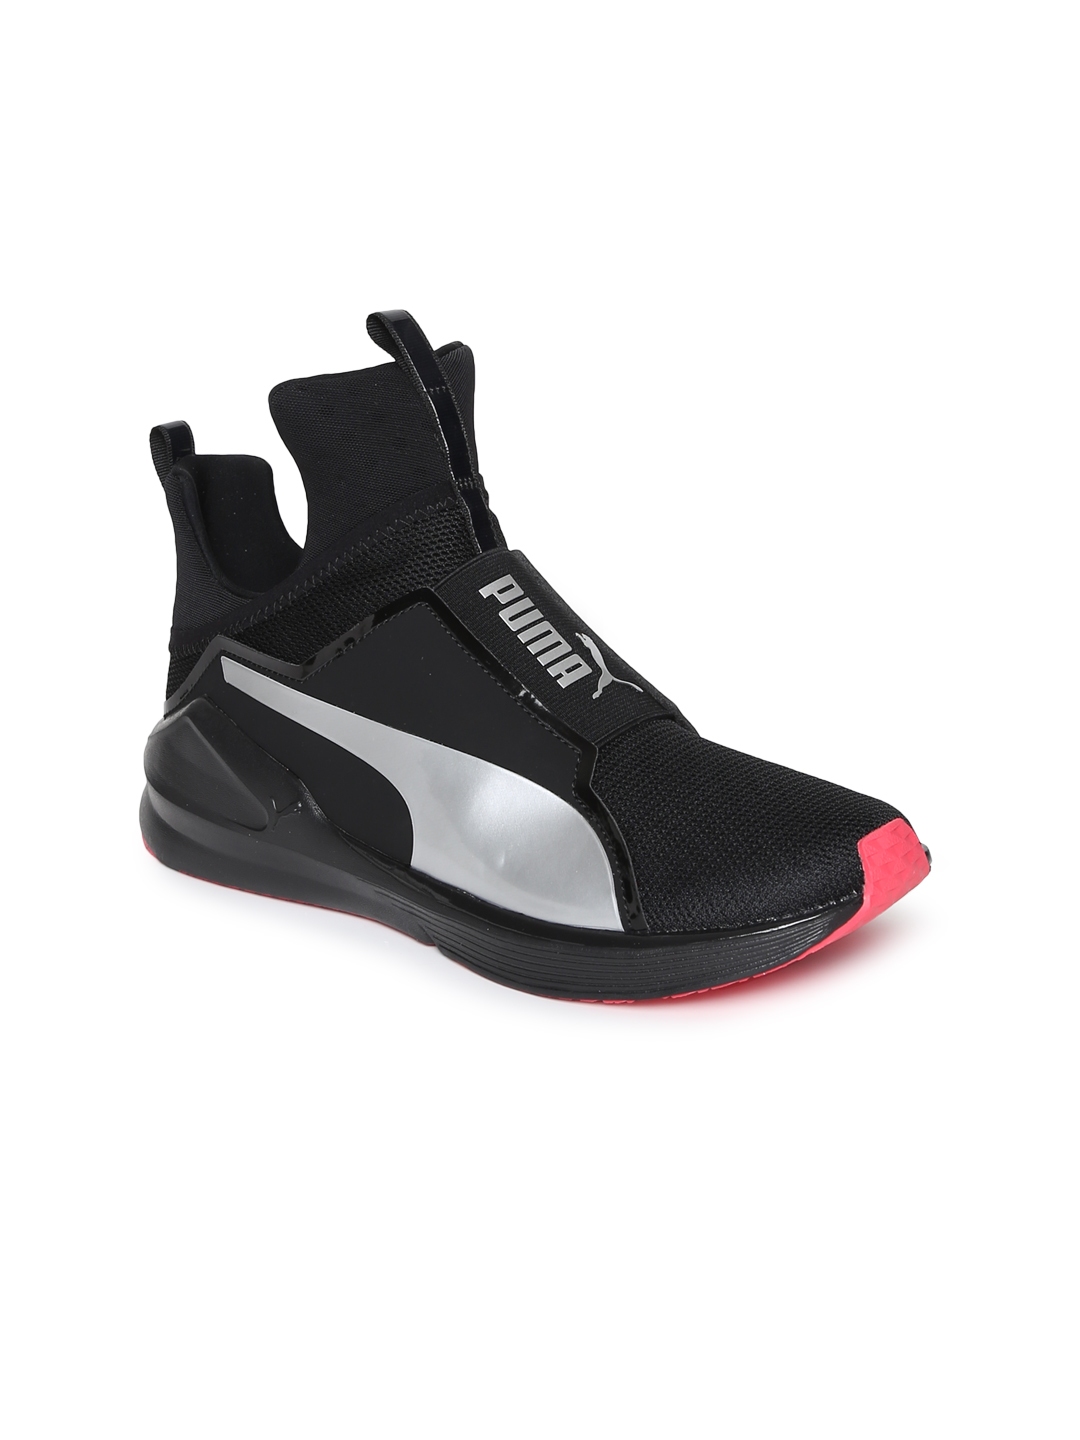 Buy Puma Women Black Shoes - Sports for Women 6703098 | Myntra